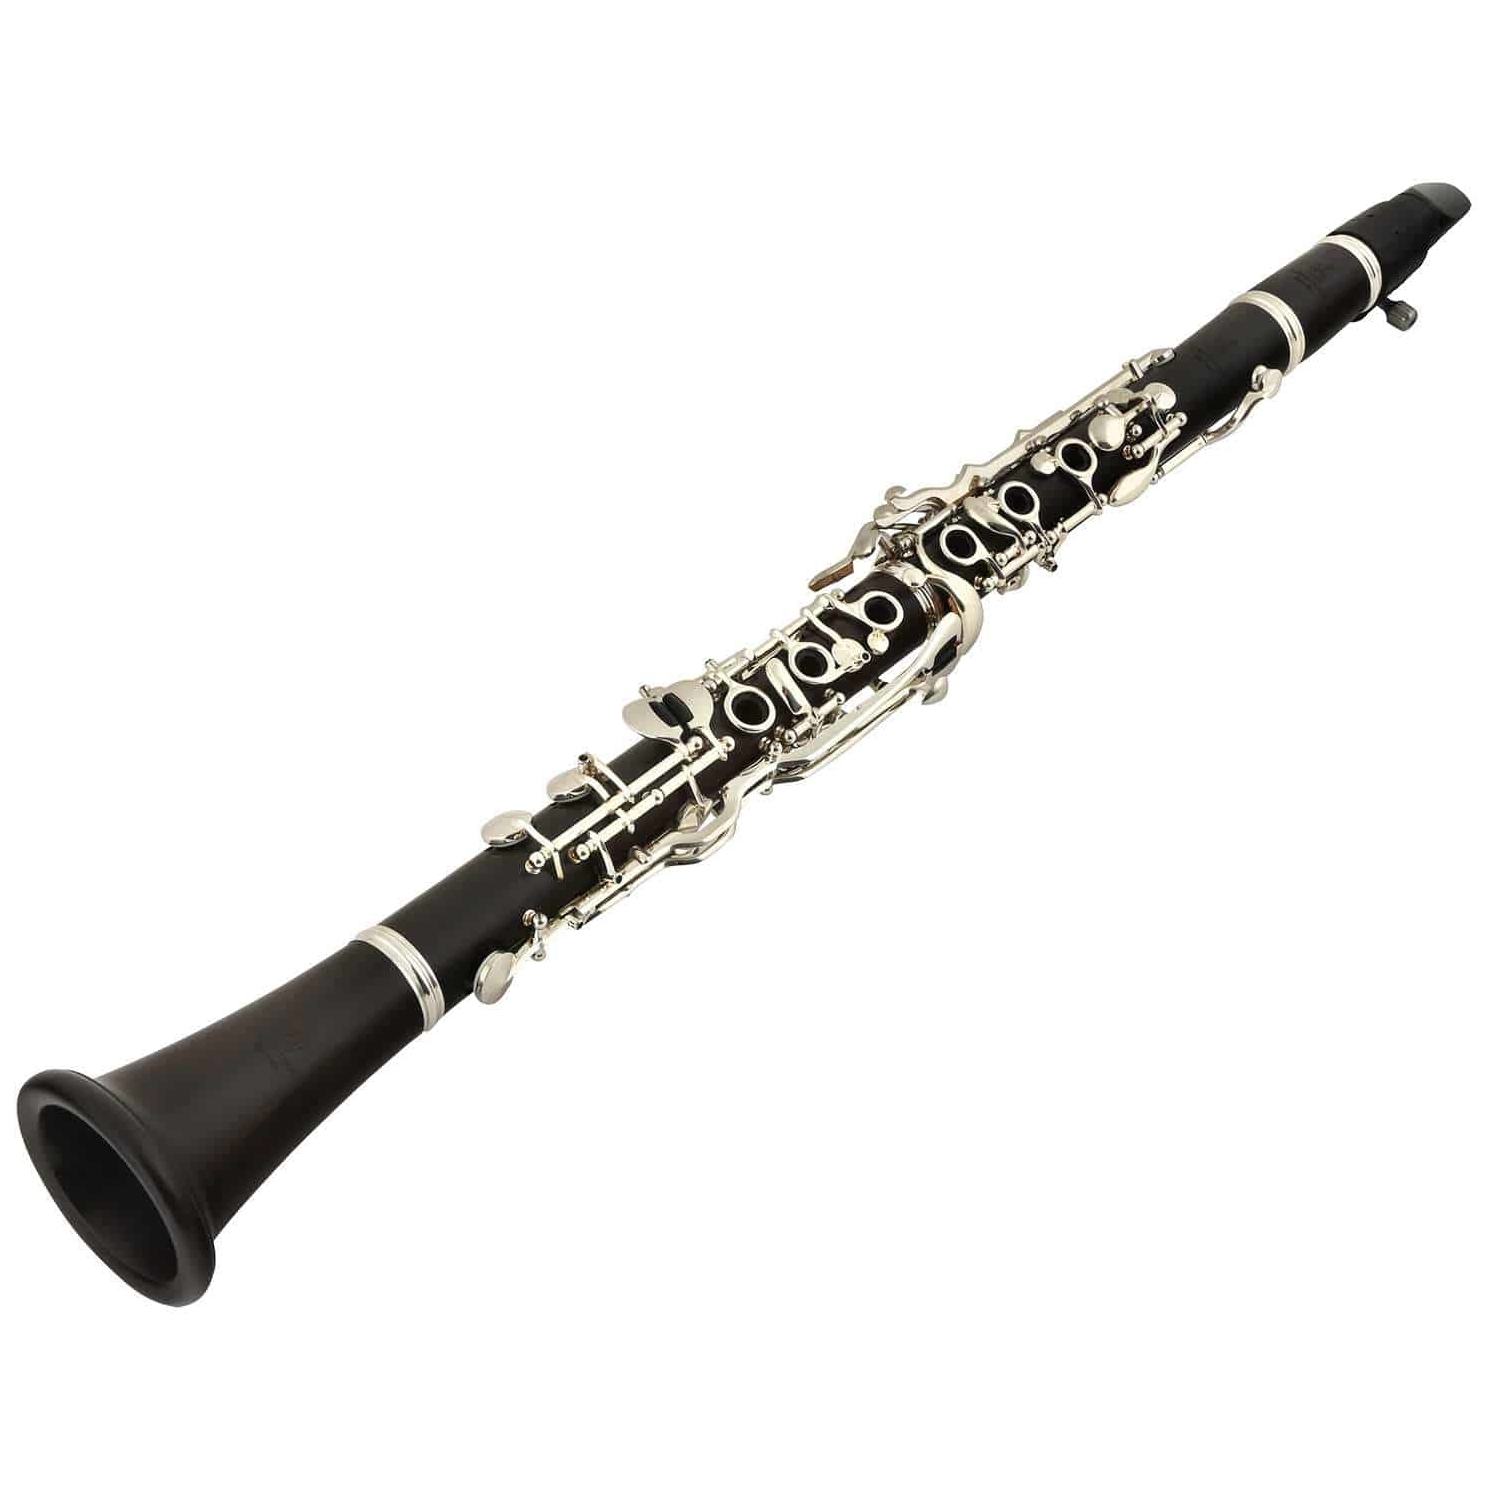 Uebel 621 Bb clarinet